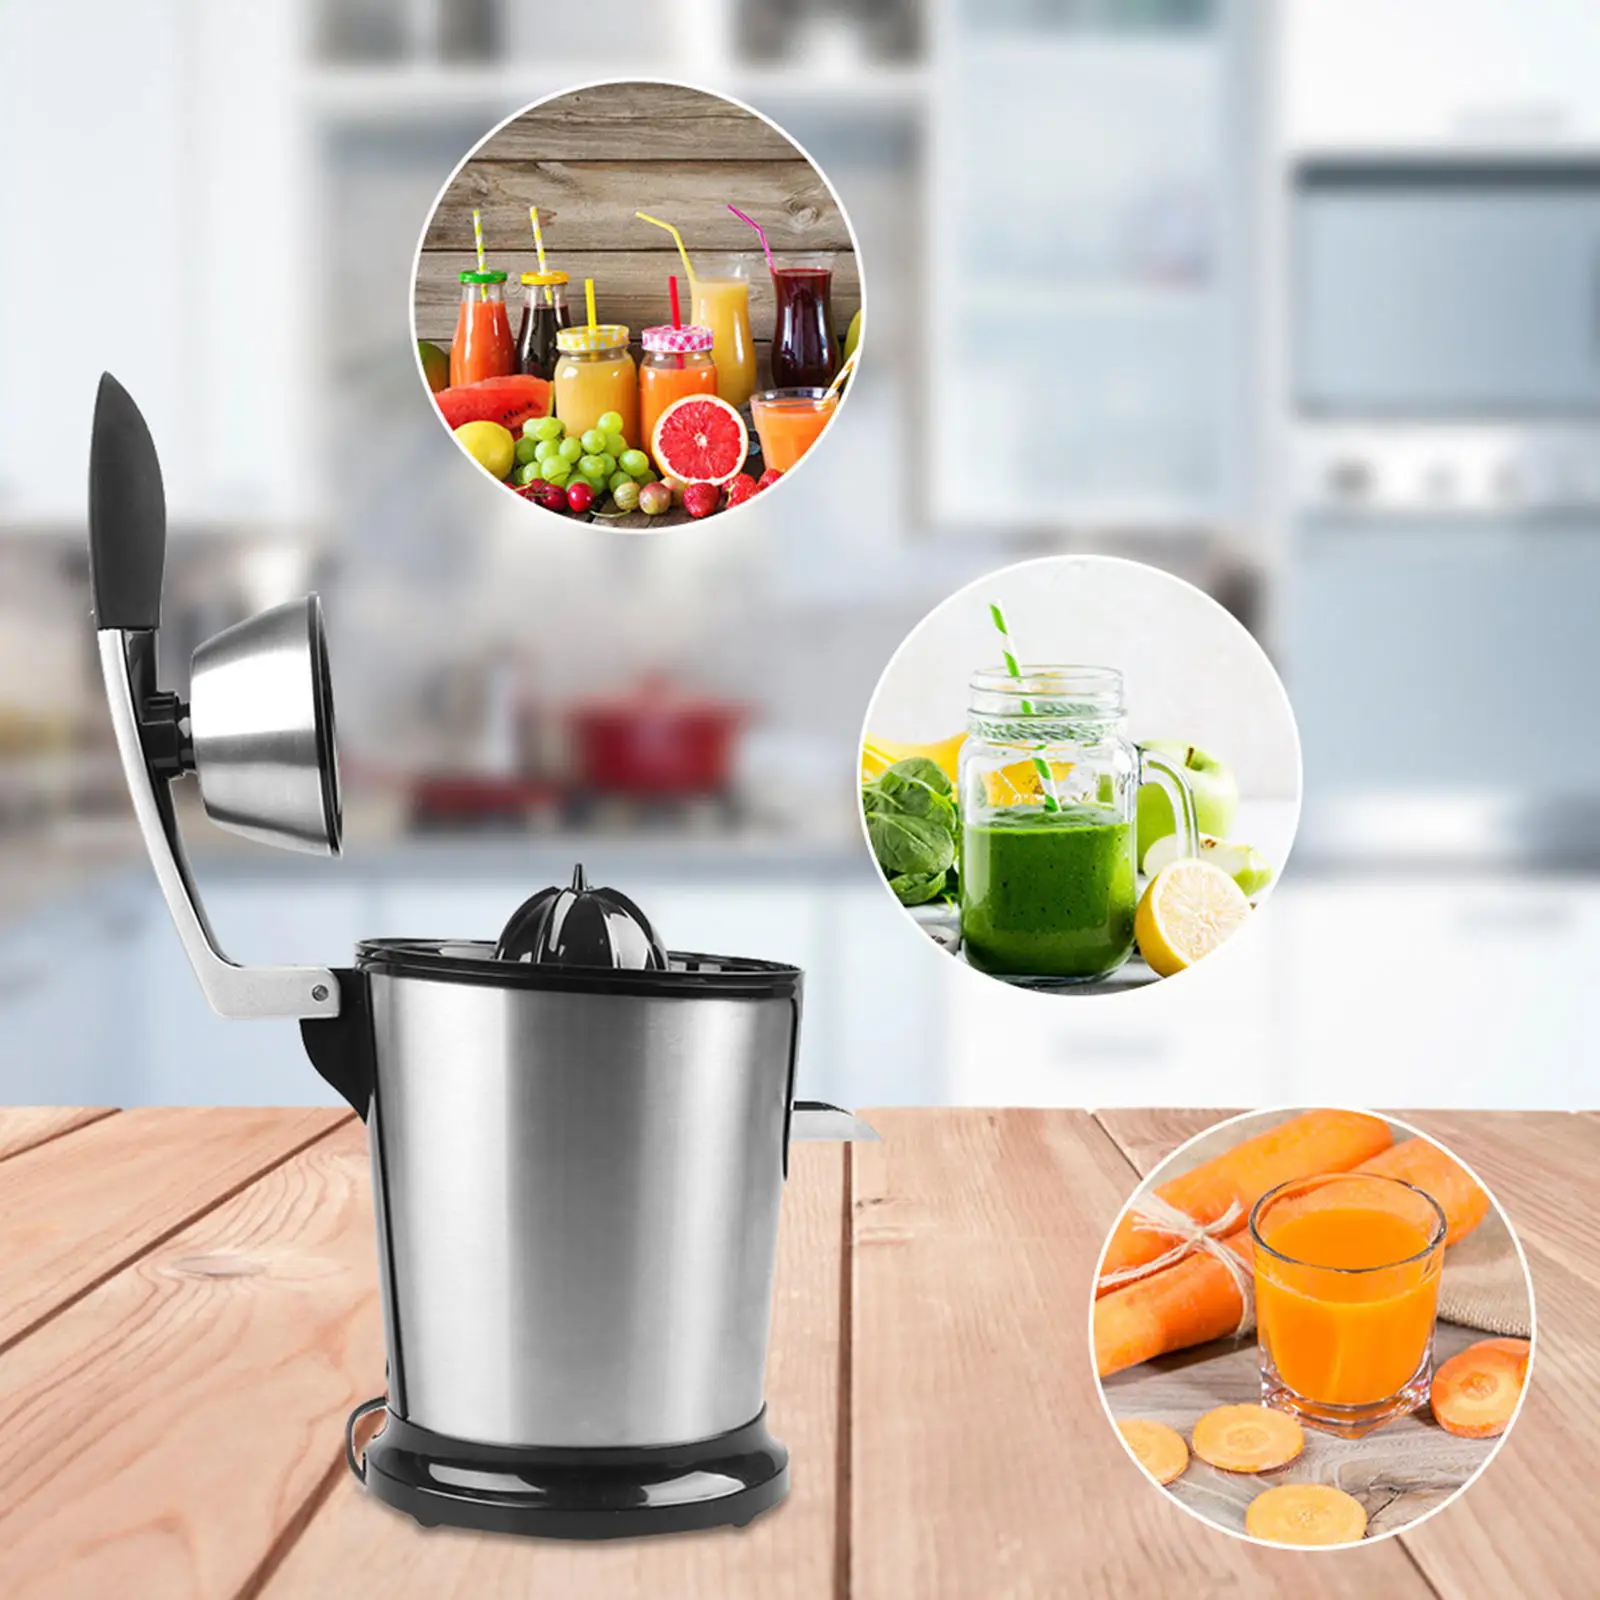 Portable Electric Juicer Easy to Clean Blender Fruit Squeezer Orange Juicer Machine for Orange Grapefruit Lemon